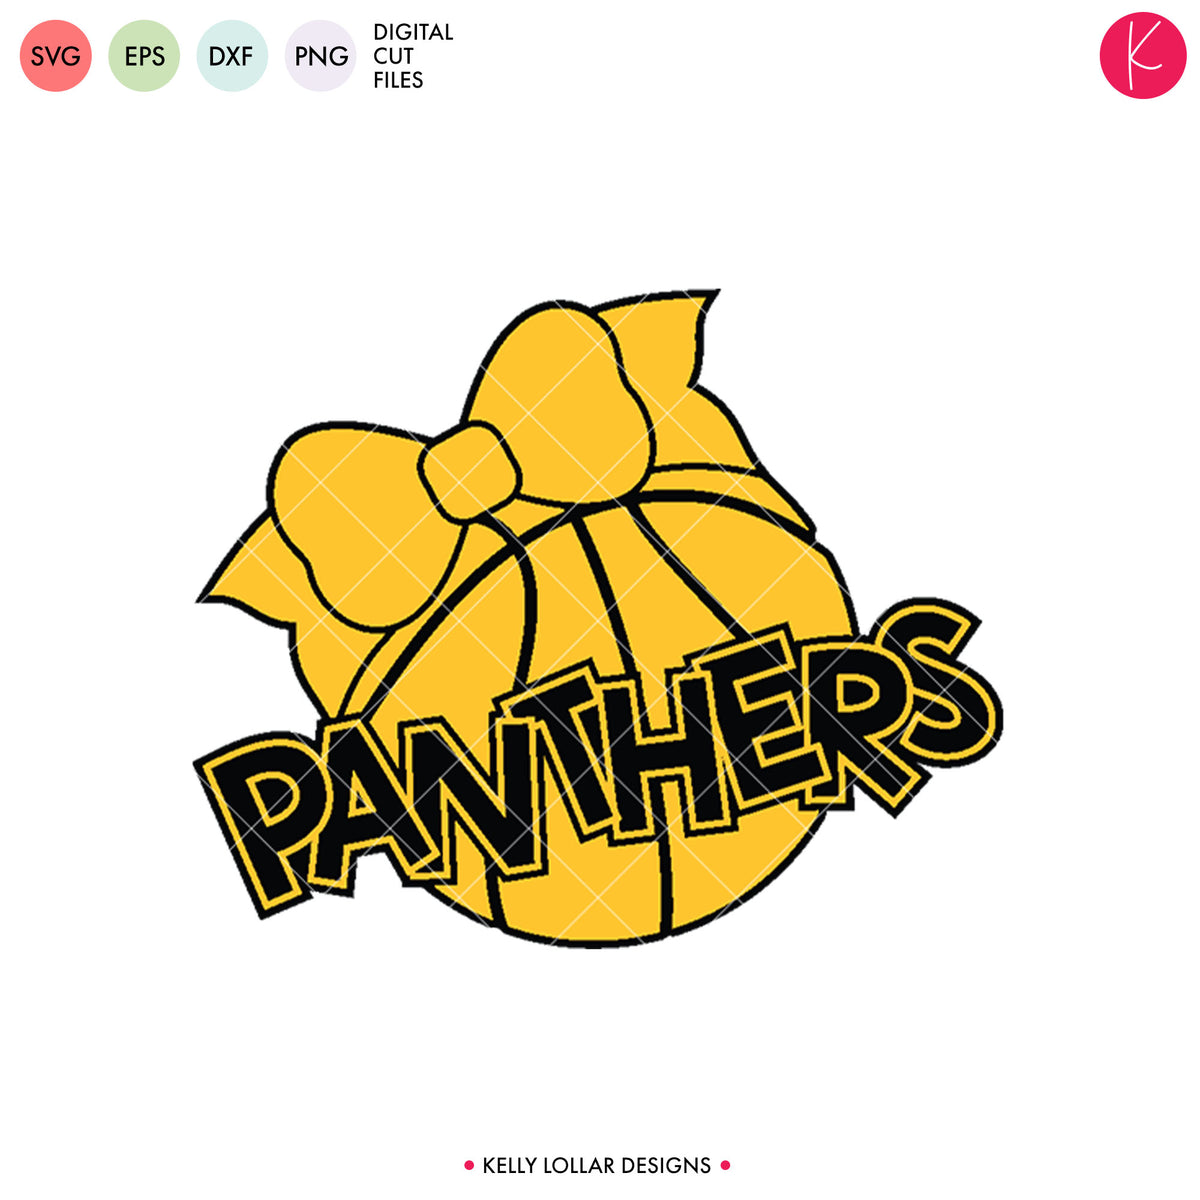 Panthers Basketball Bundle | SVG DXF EPS PNG Cut Files